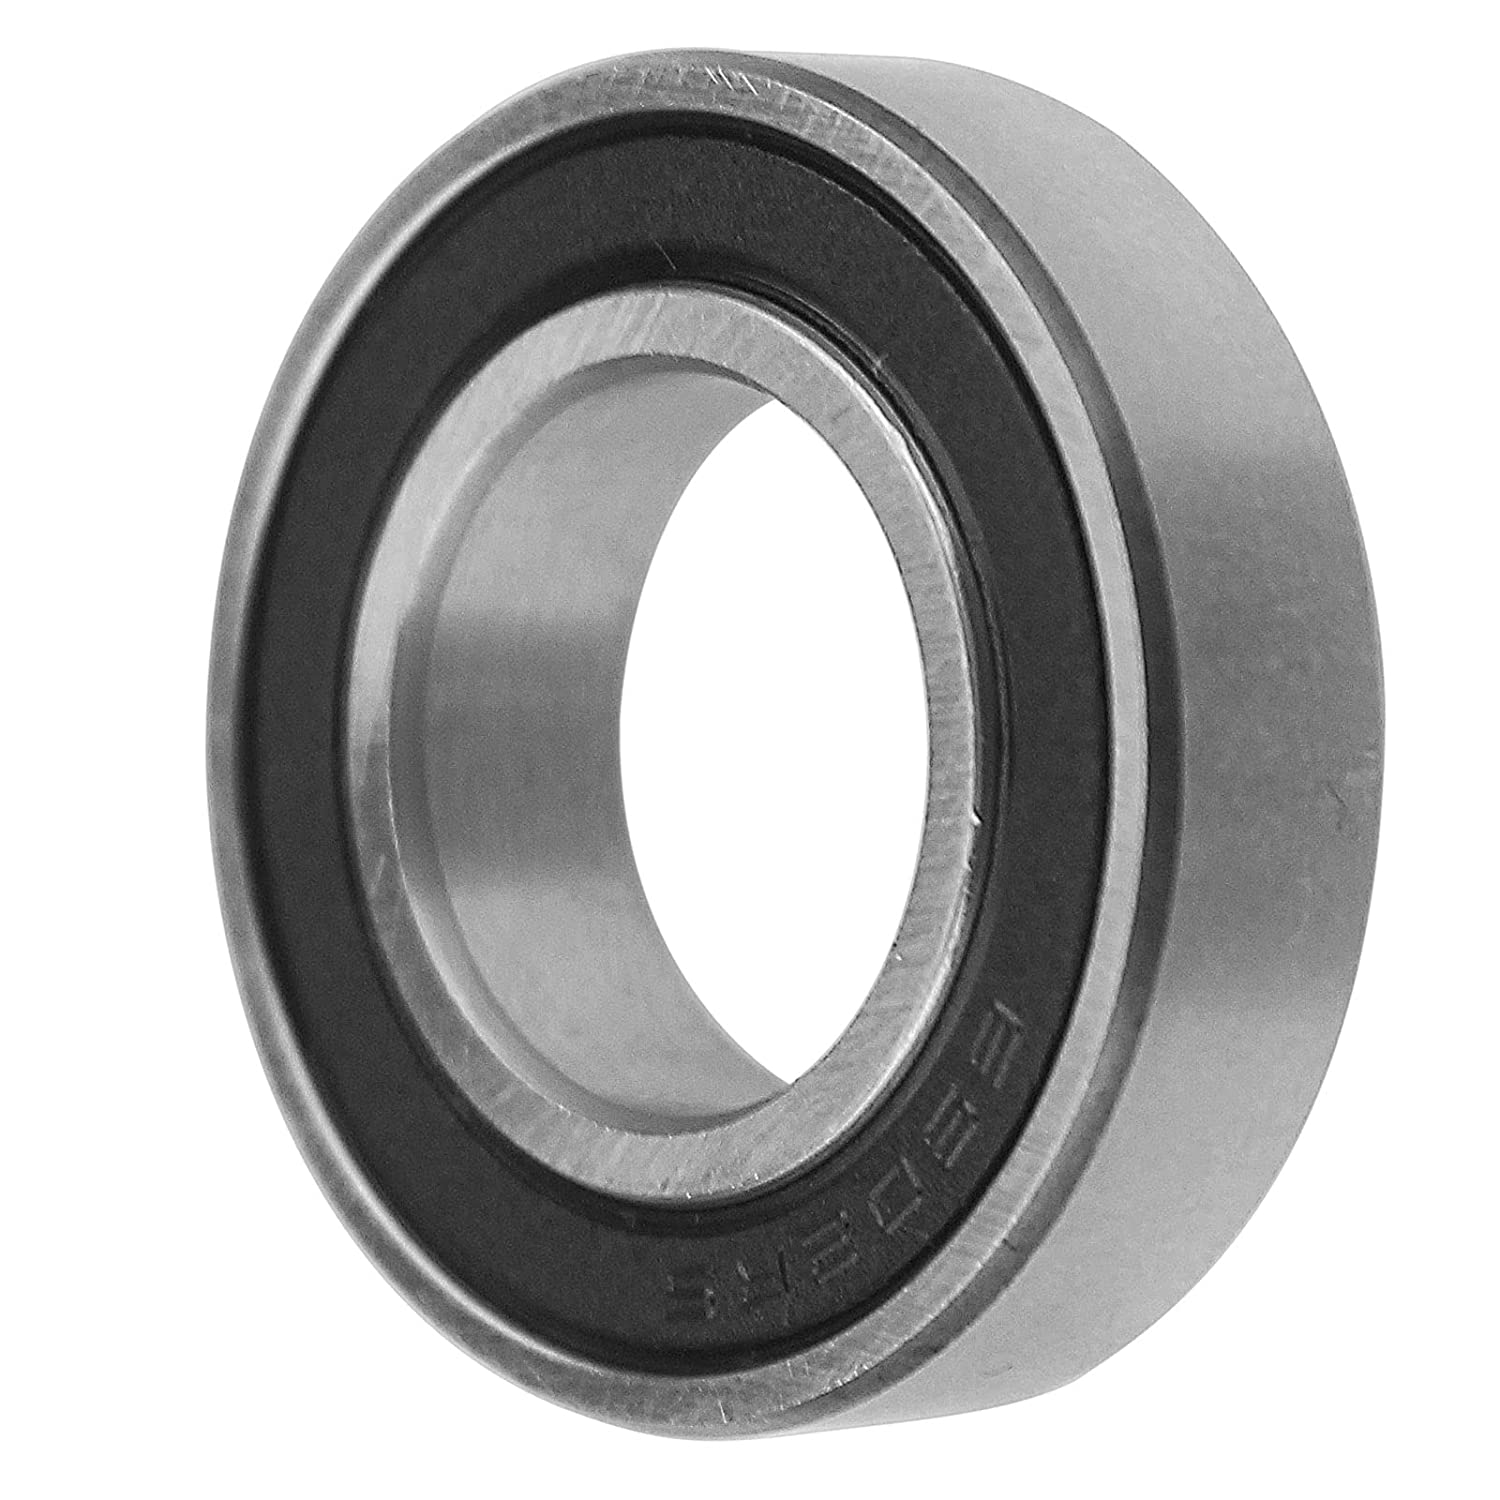 Hybrid ceramic ball bearings